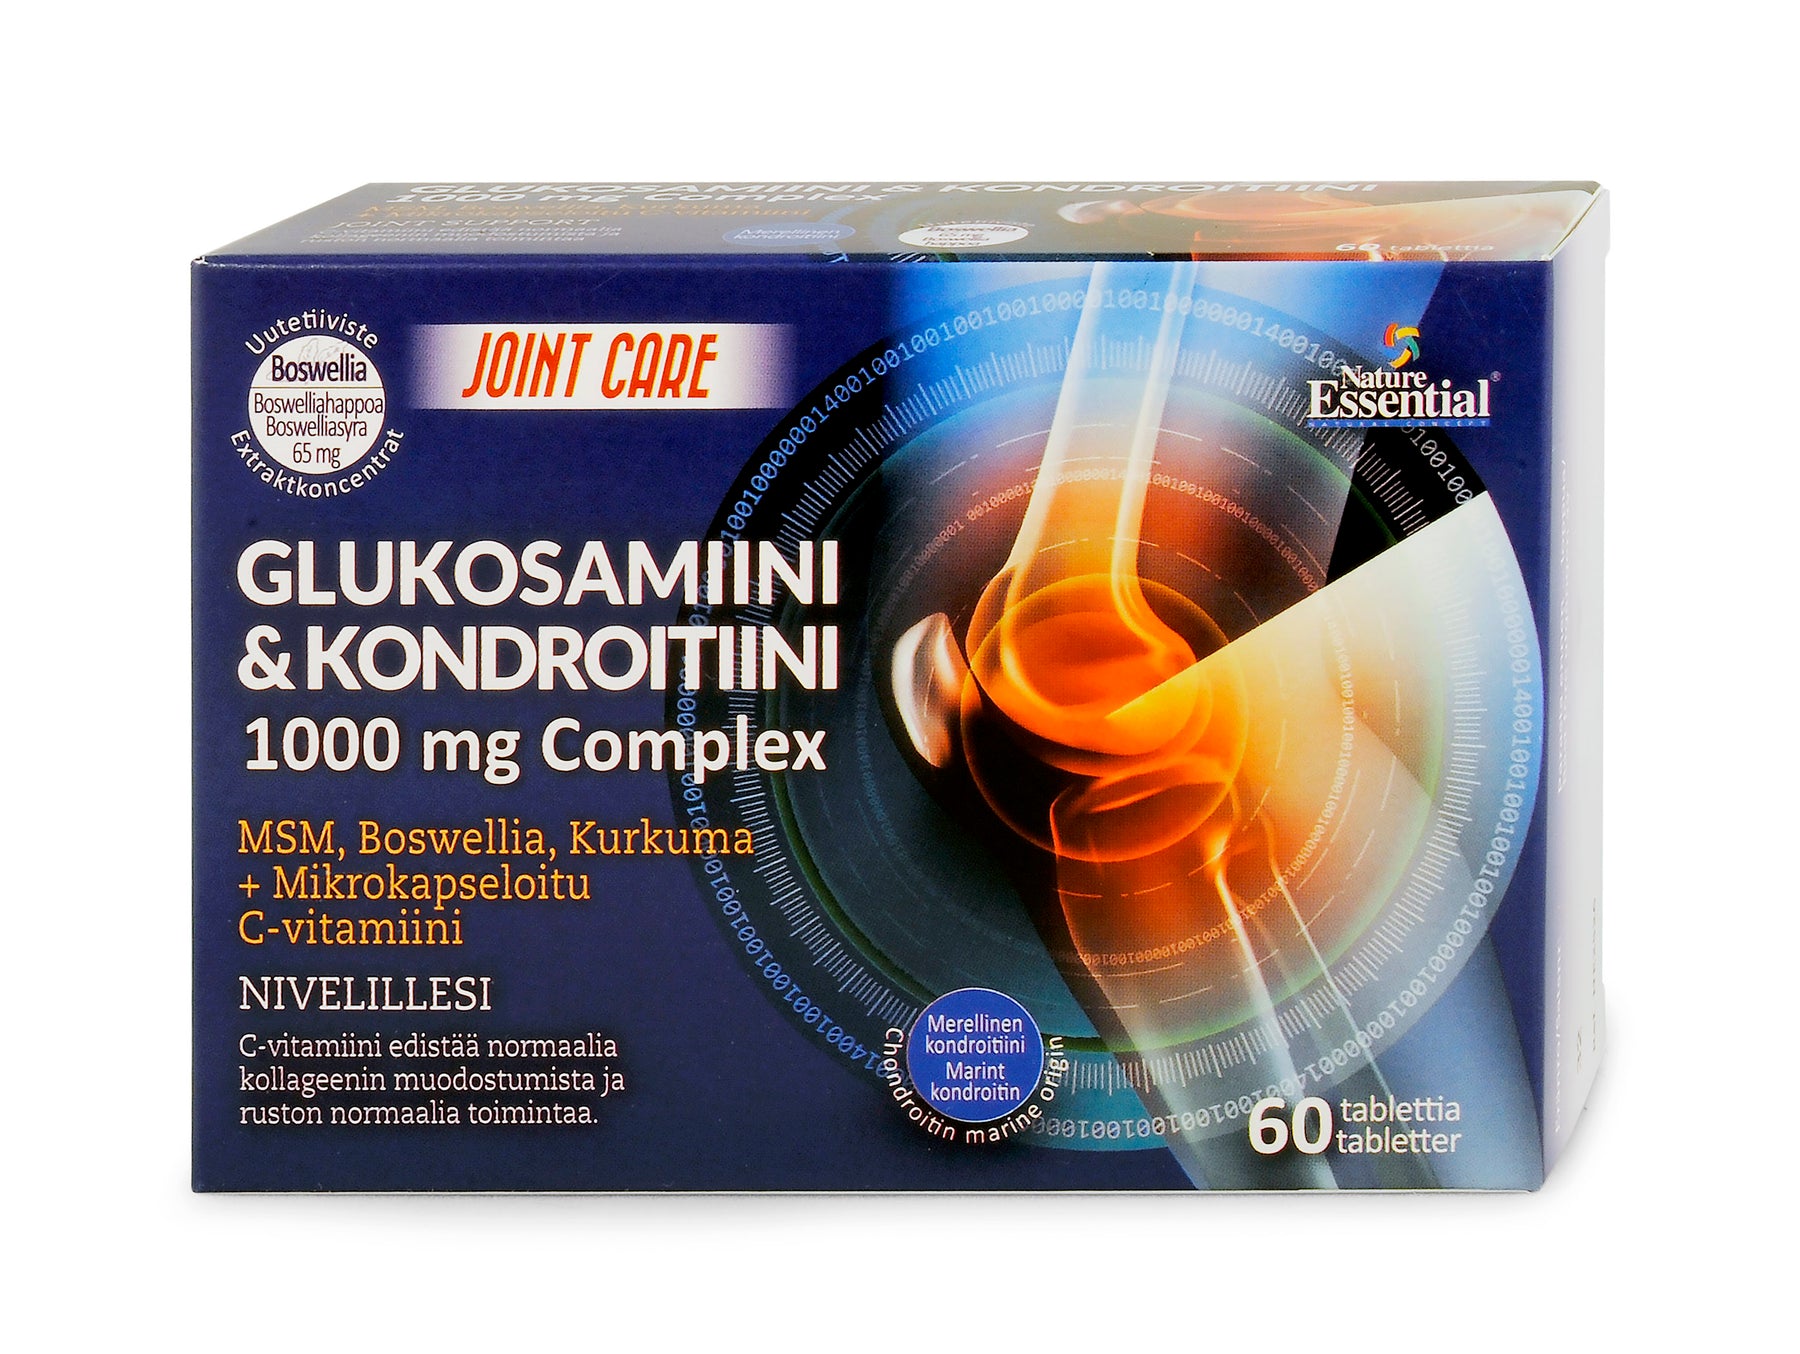 Joint Care Glukosamiini & Kondroitiini 1000 mg Complex 60 tabl.